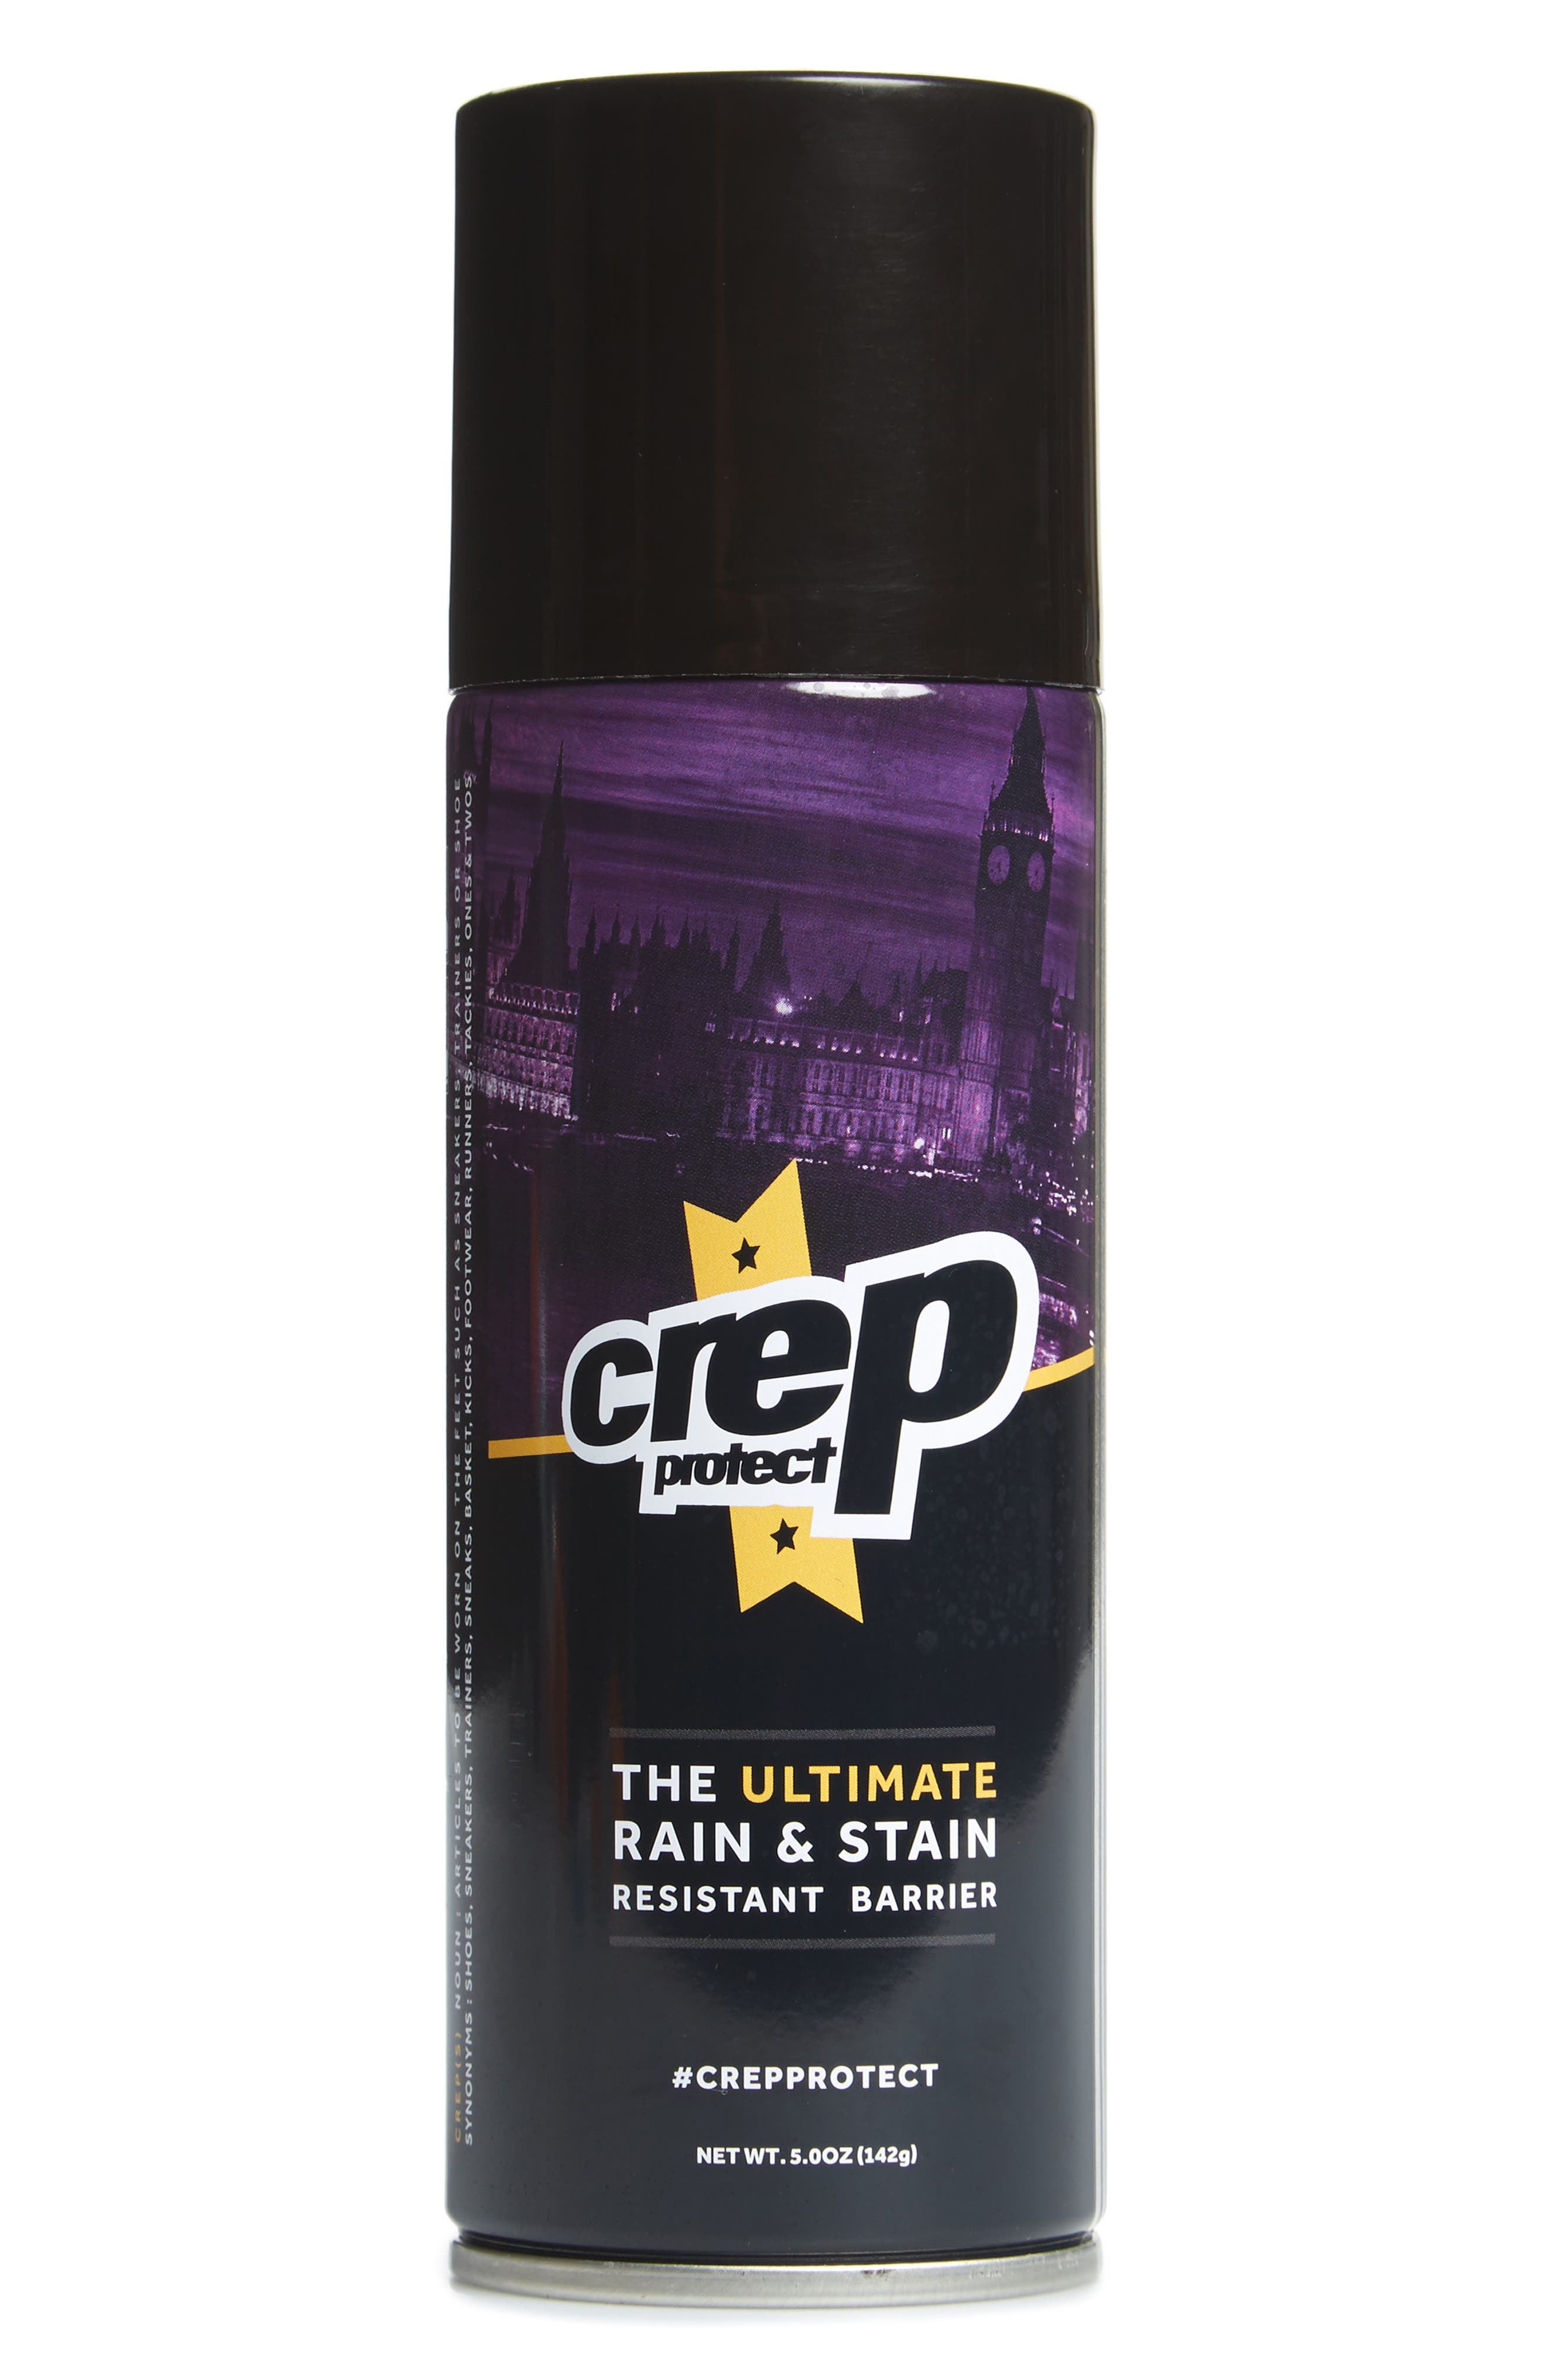 crep spray on uggs